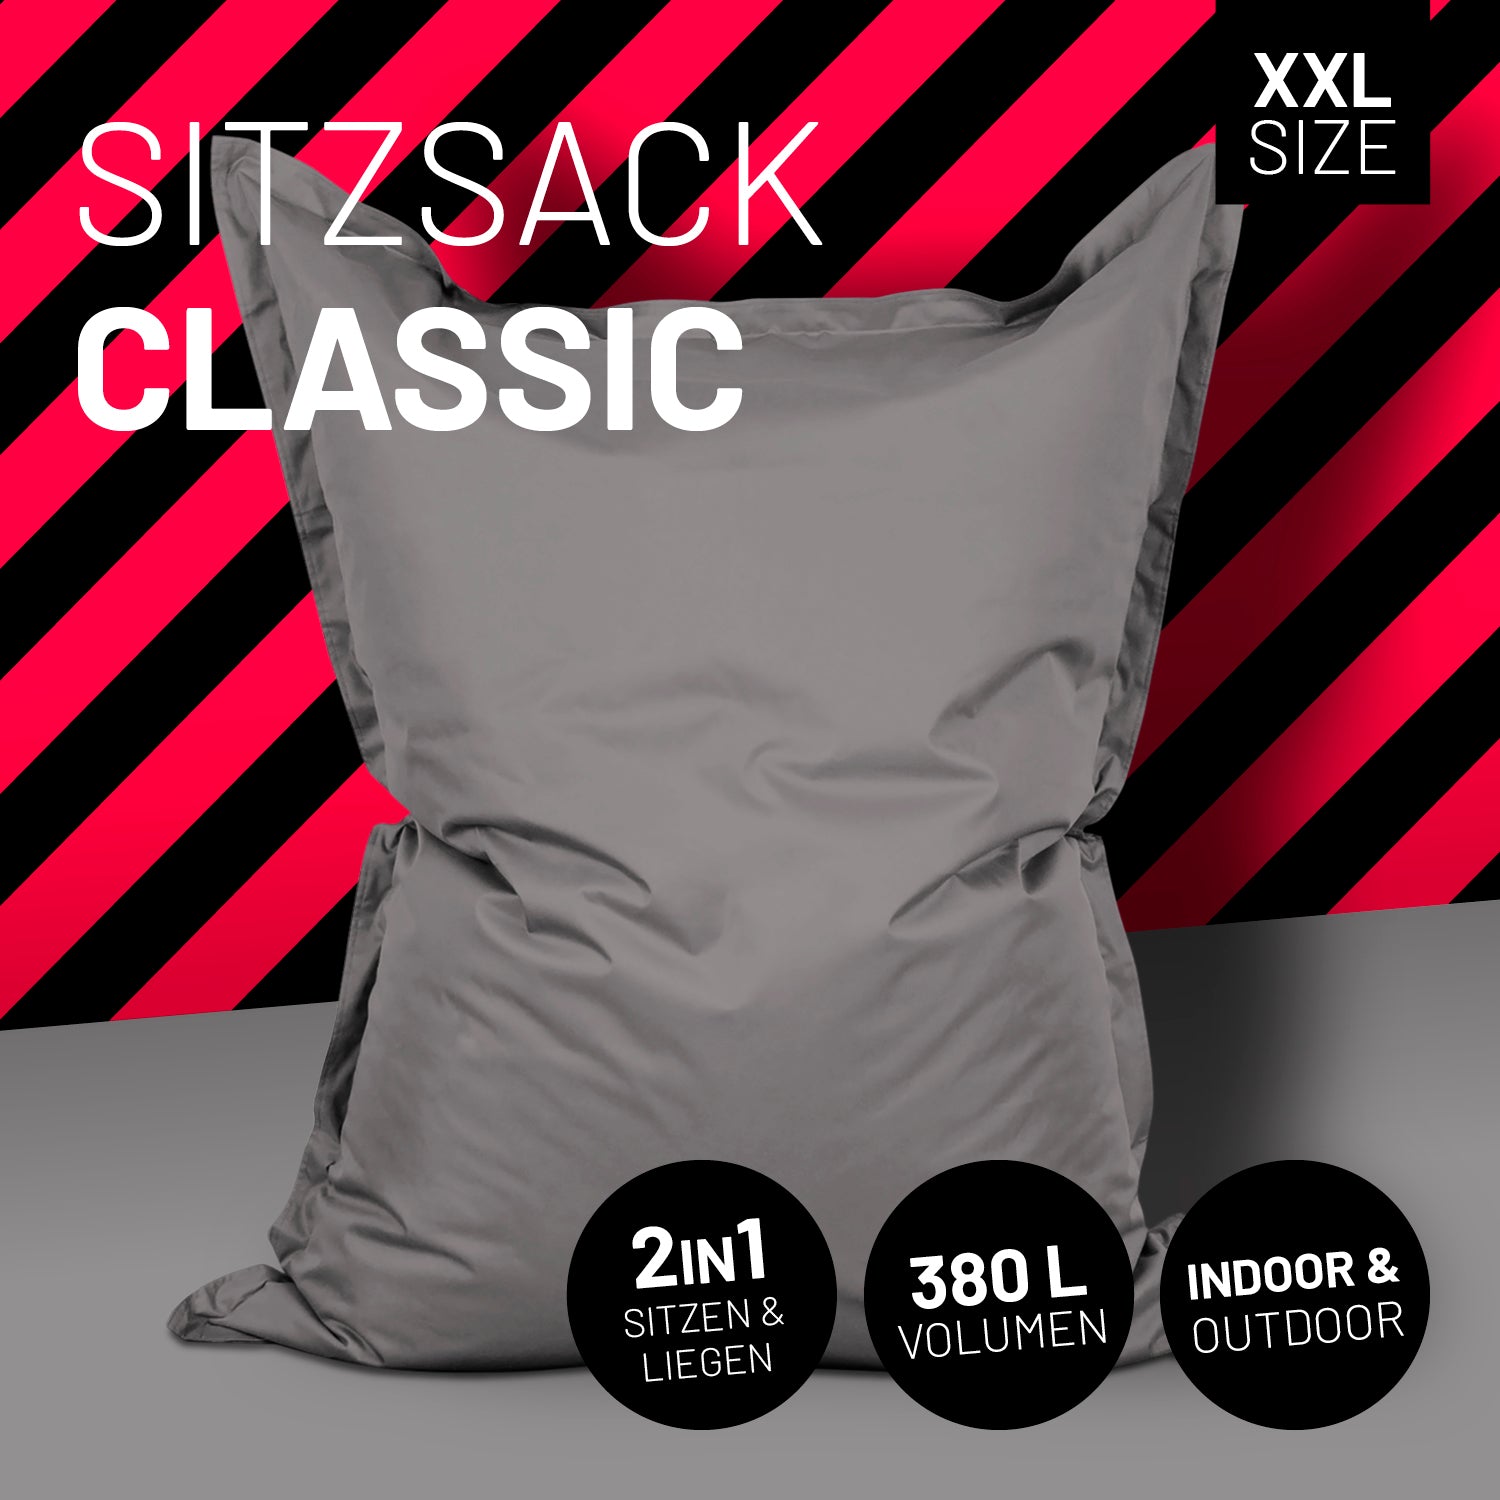 Sitzsack Classic XXL (380 L) - In- & outdoor - Grau